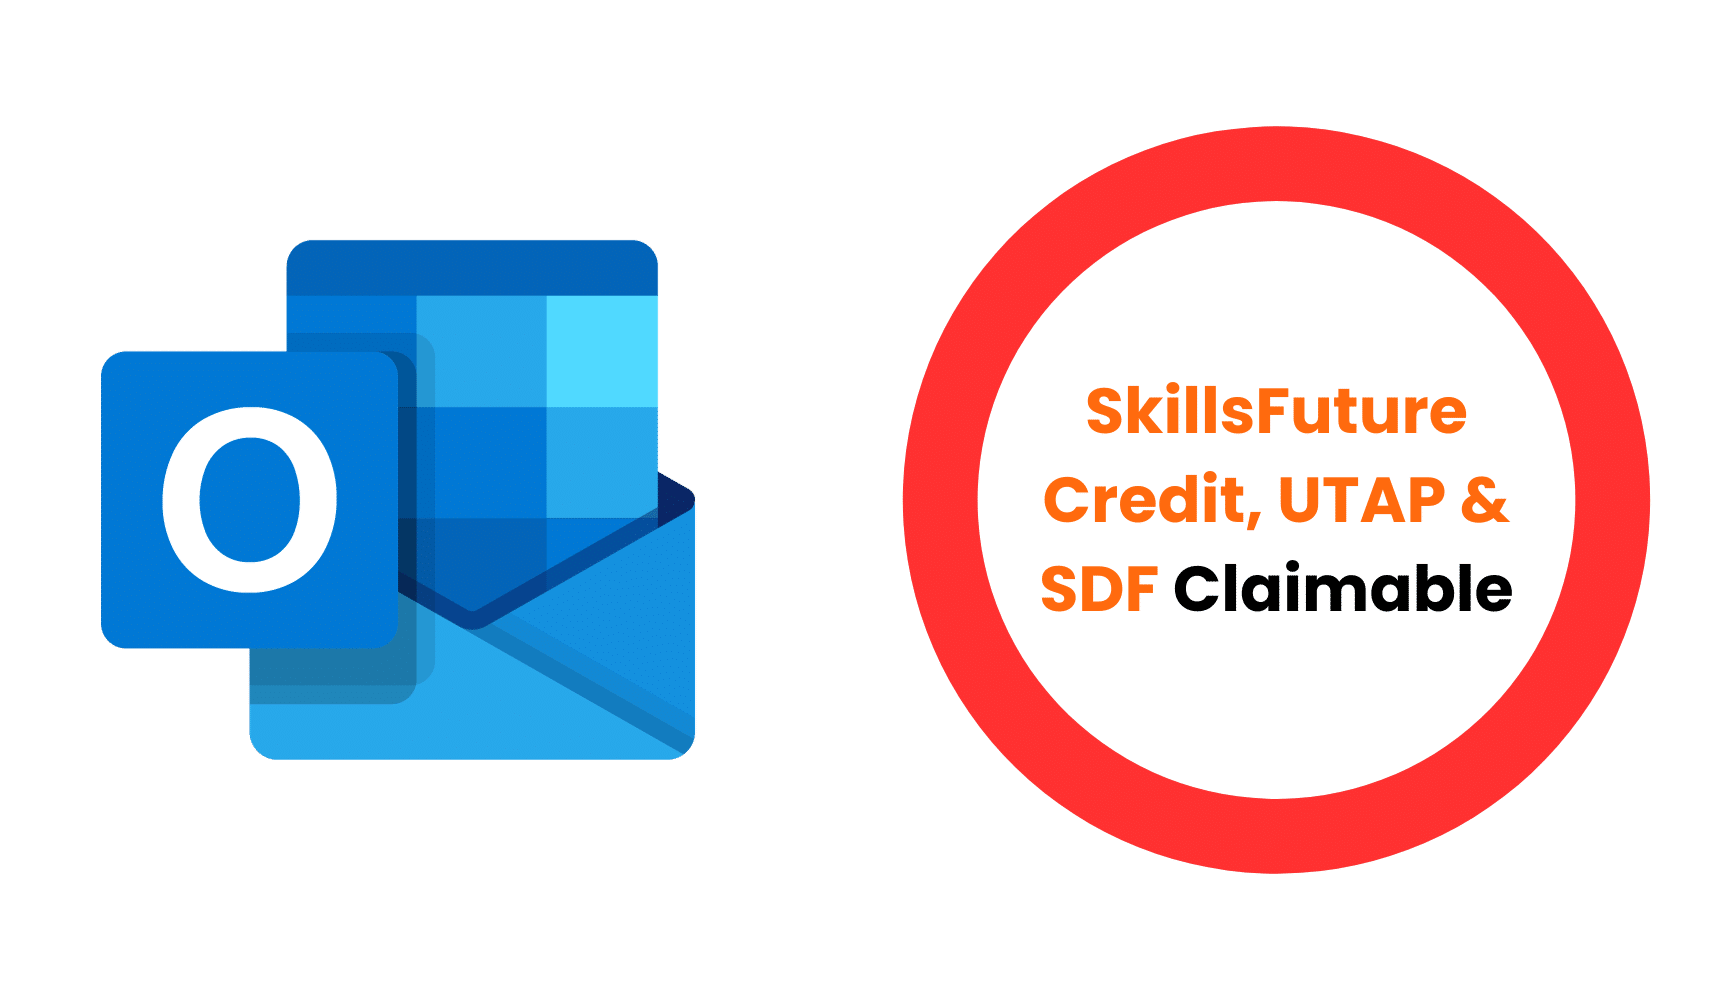 Microsoft Outlook Courses Singapore - SkillsFuture Credit, UTAP & SDF Claimable